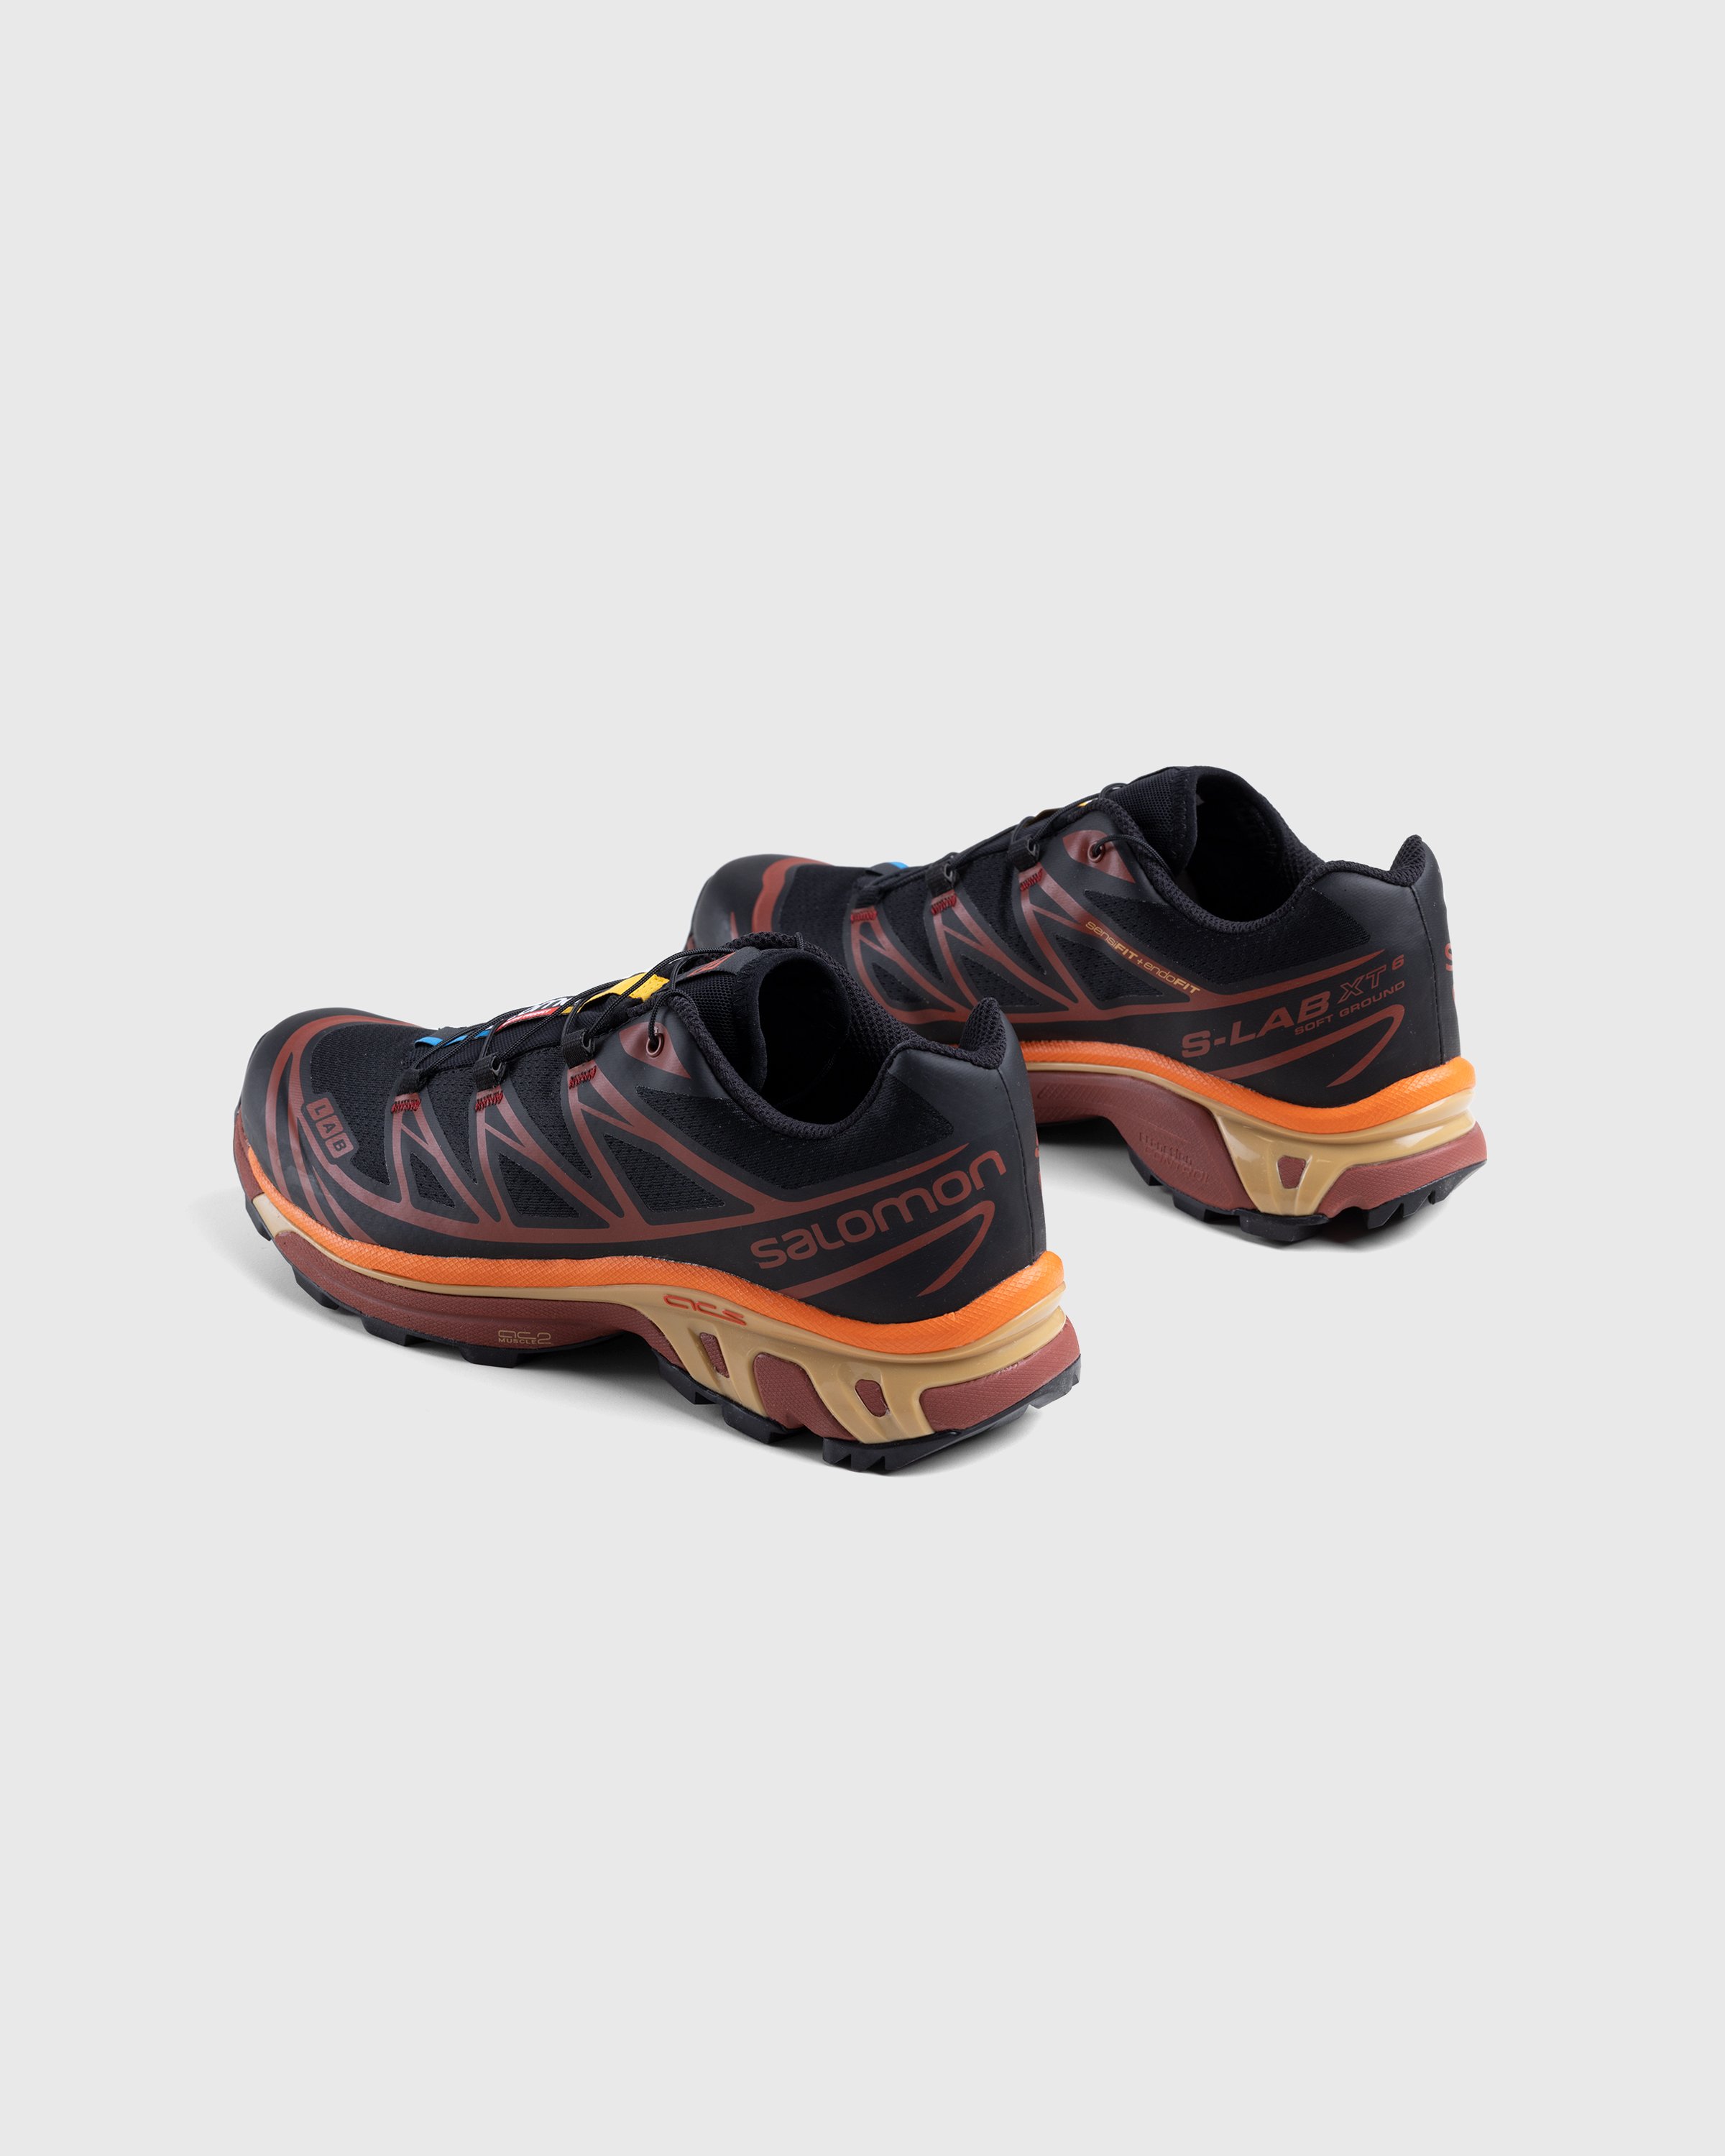 Salomon - XT-6 Black/Chocolate Plum/Vibrant Orange - Footwear - Brown - Image 4